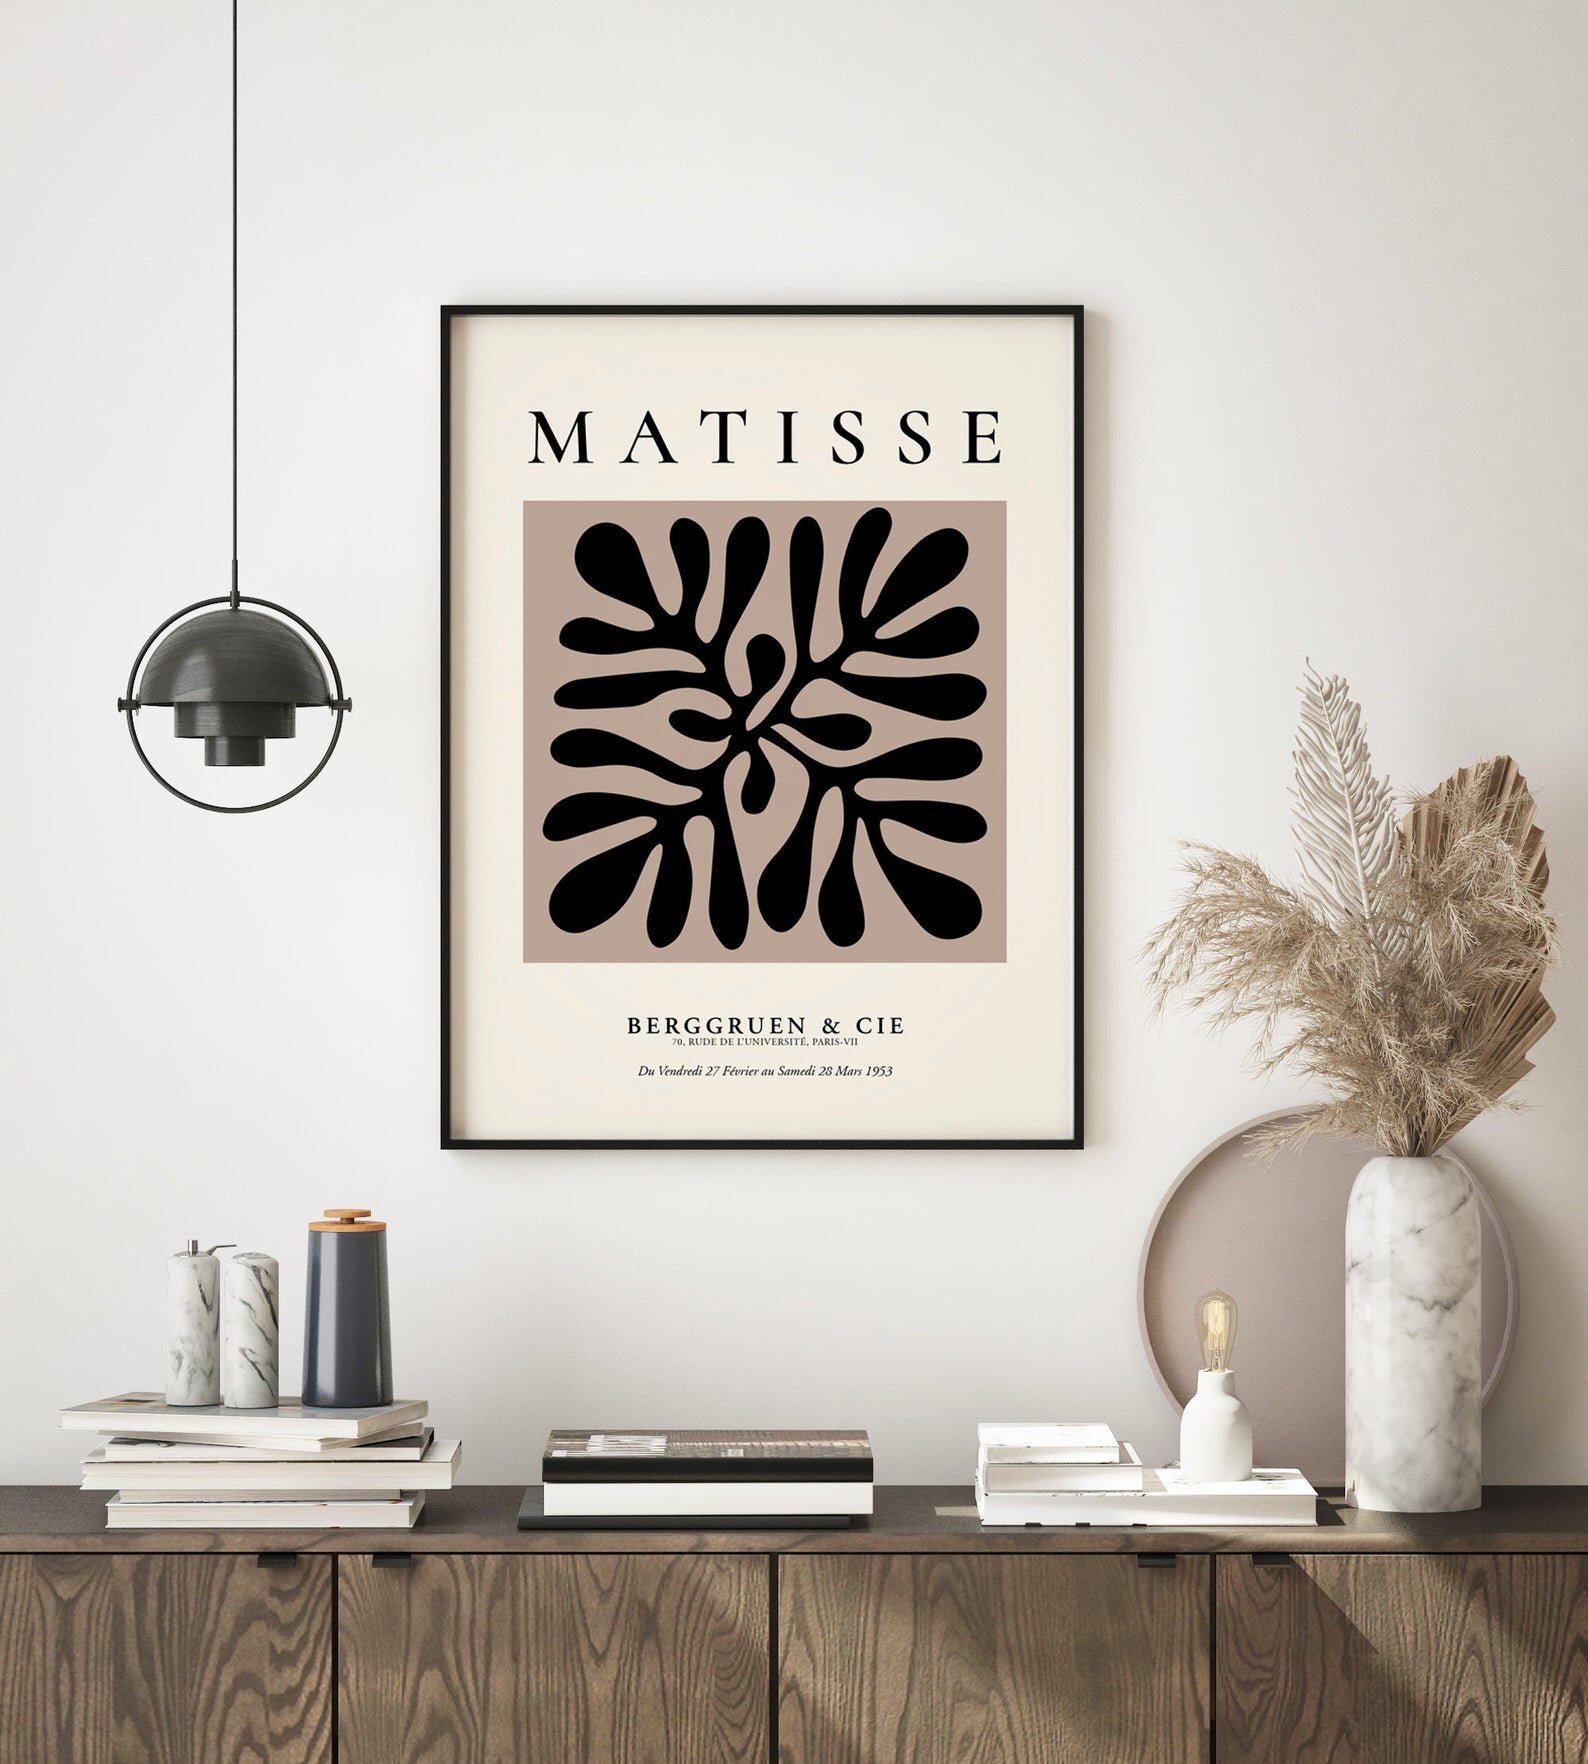 Matisse Cut Out Print